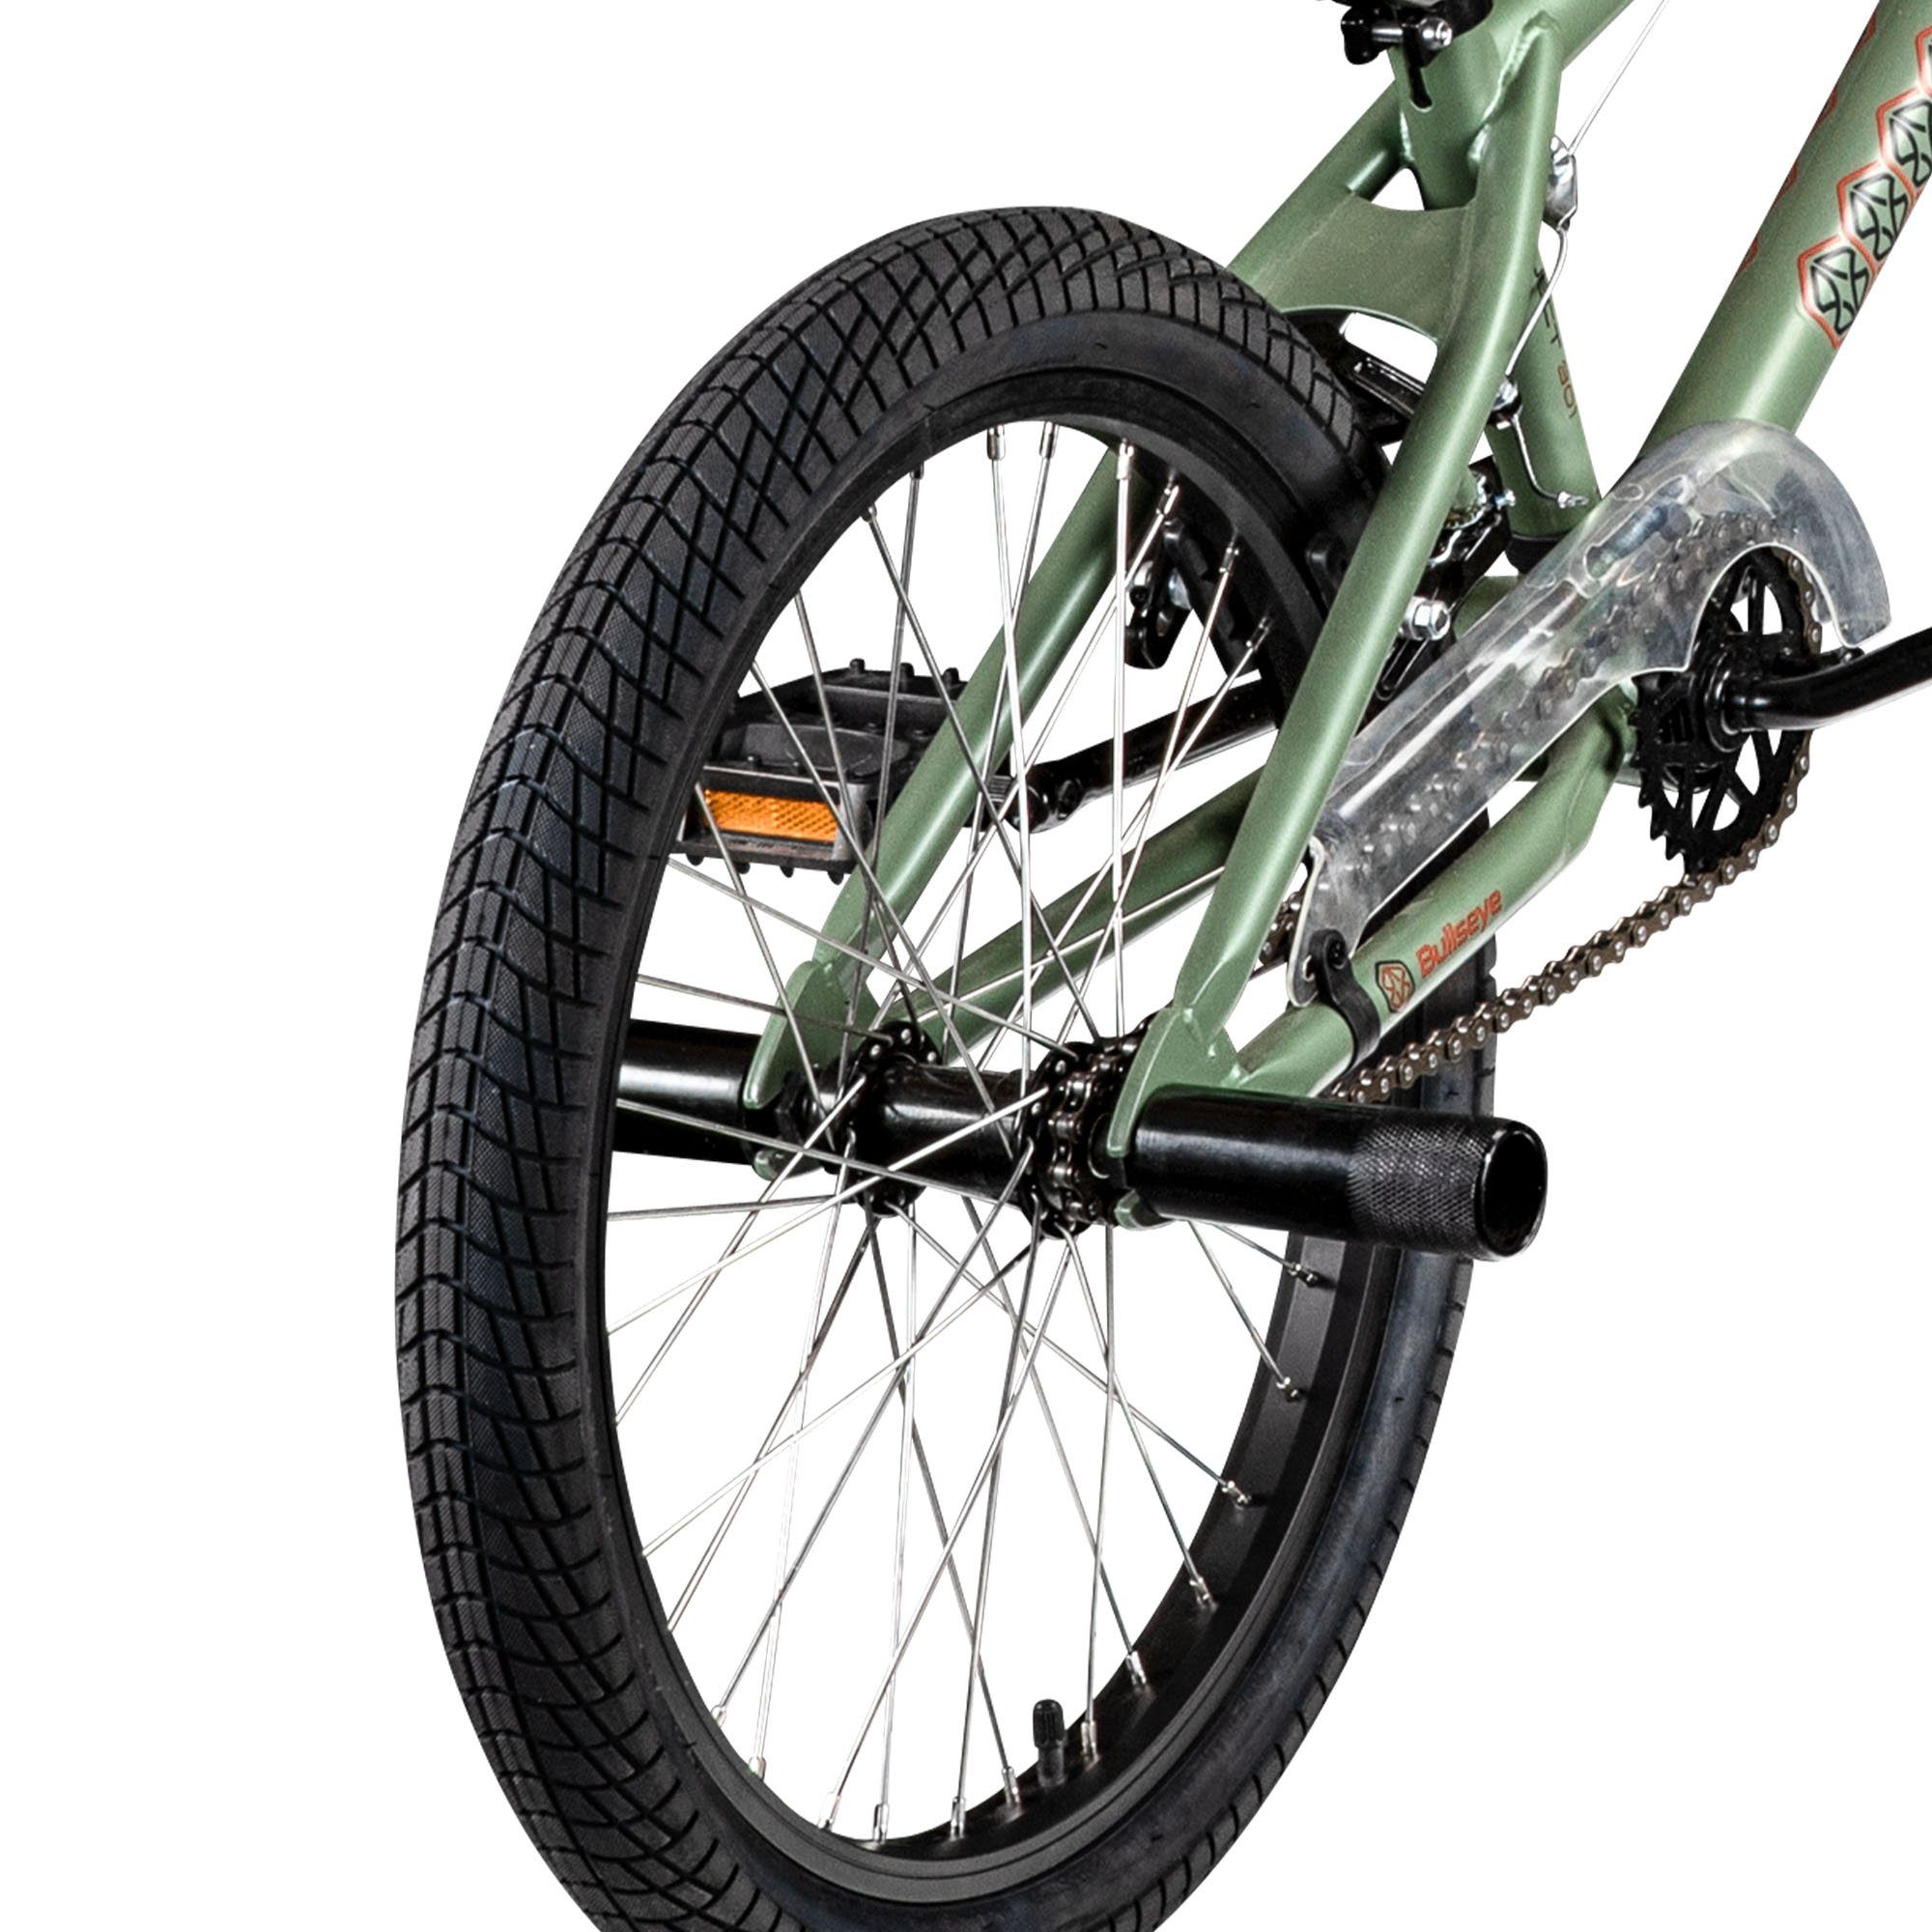 360° Jugendliche BMX-Rad Zoll Project 20 Rotor 2 1 Pegs Gang, khaki Erwachsene Rad BMX 301, bullseye Fahrrad